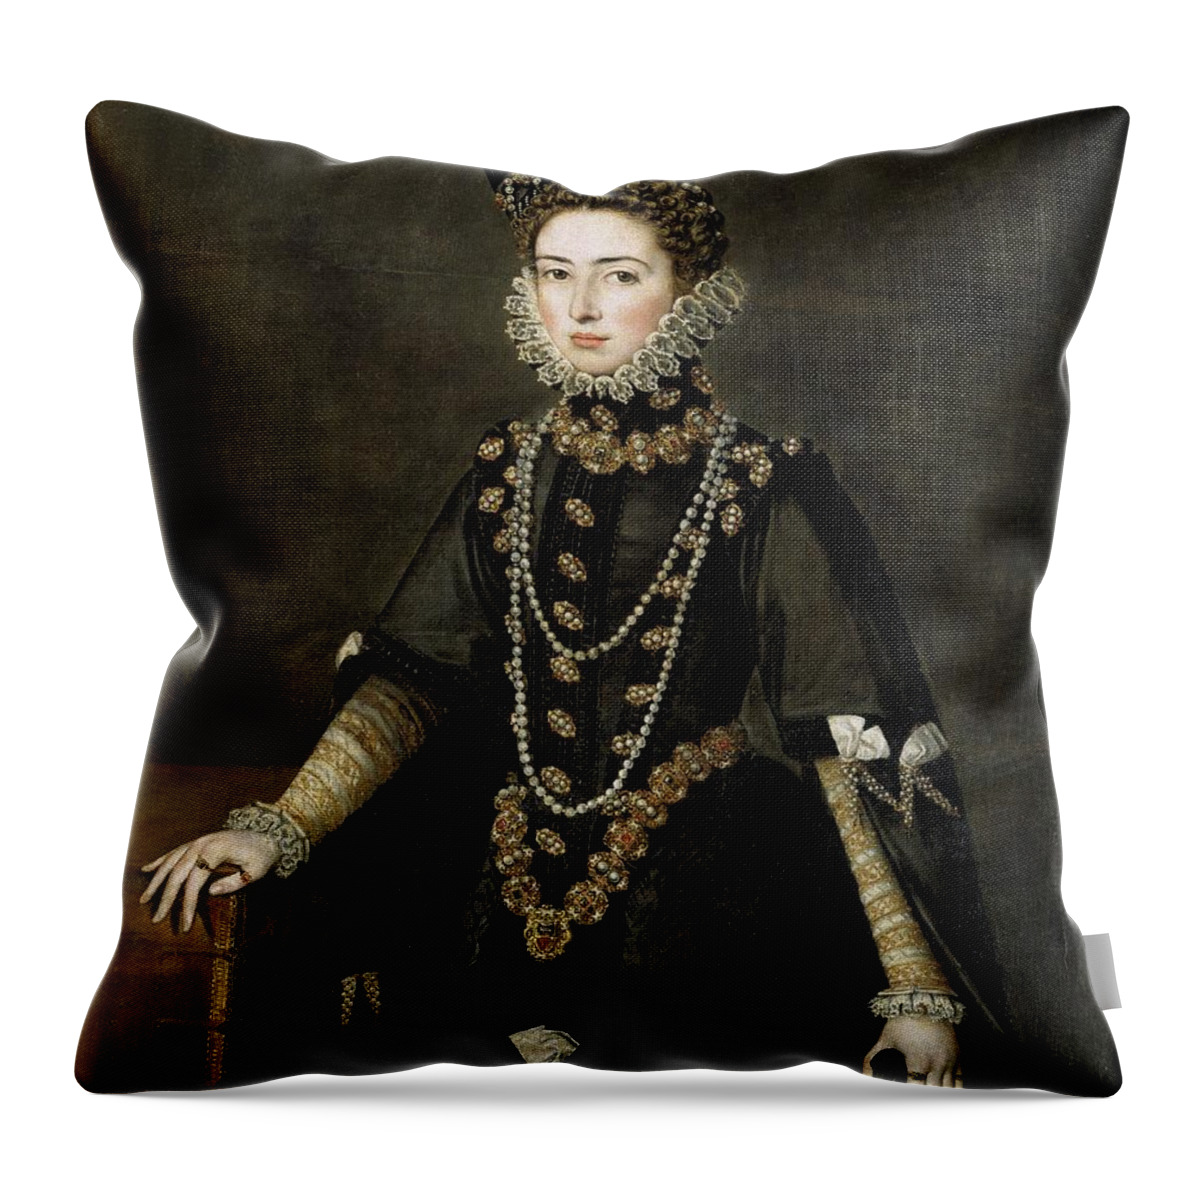 Alonso Sanchez Coello Throw Pillow featuring the painting 'Catalina Micaela de Austria, Duchess of Savoy', 1584-1585, Spanish Schoo... by Alonso Sanchez Coello -1531-1588-